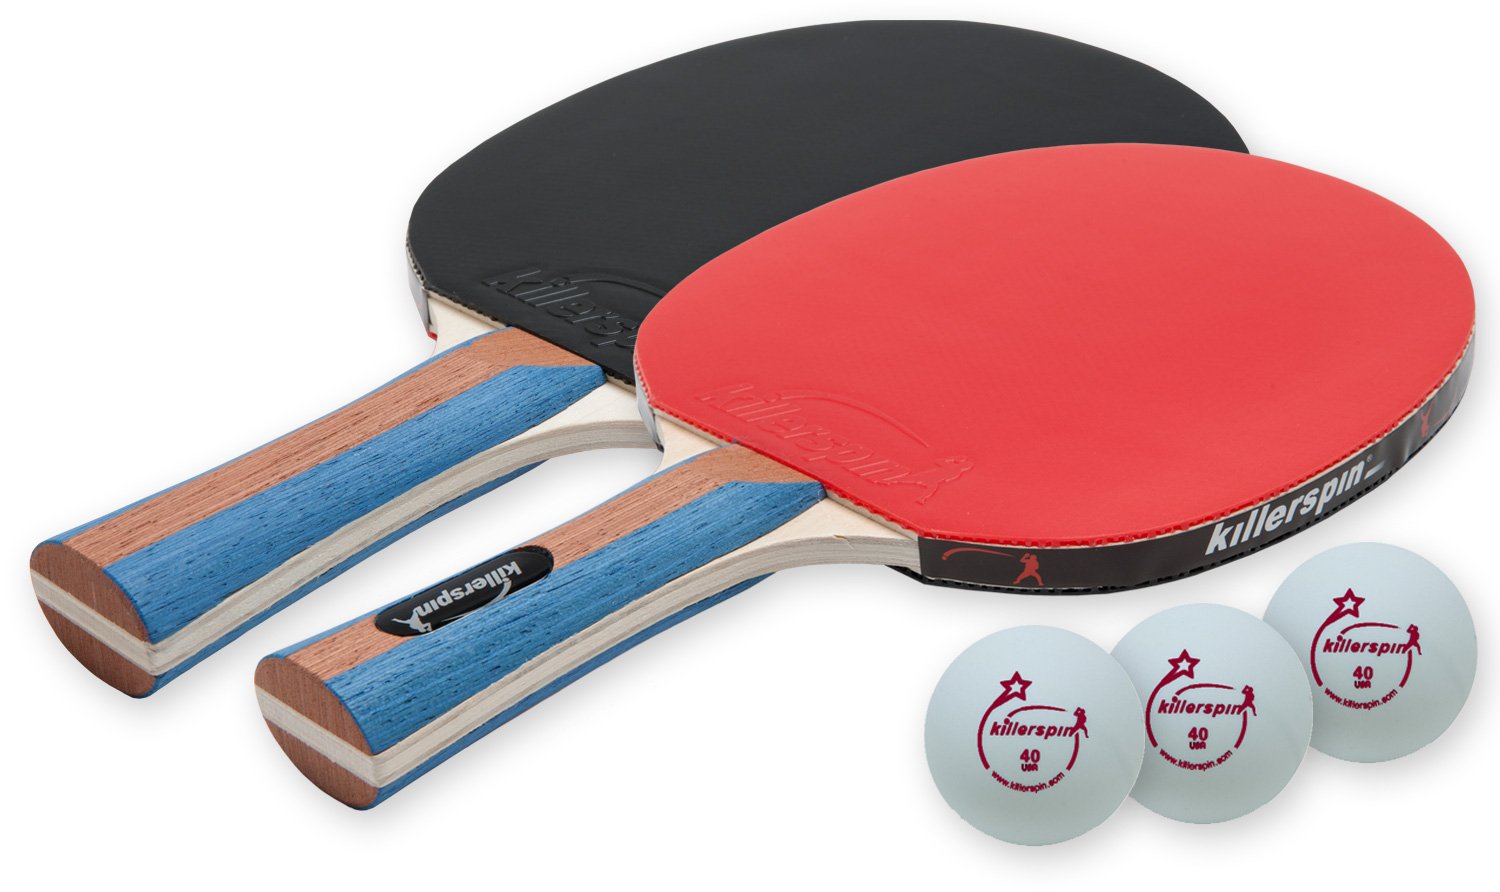 Killerspin JETSET 2 - Table Tennis Set with 2 Ping Pong Paddles and 3 Ping Pong Balls